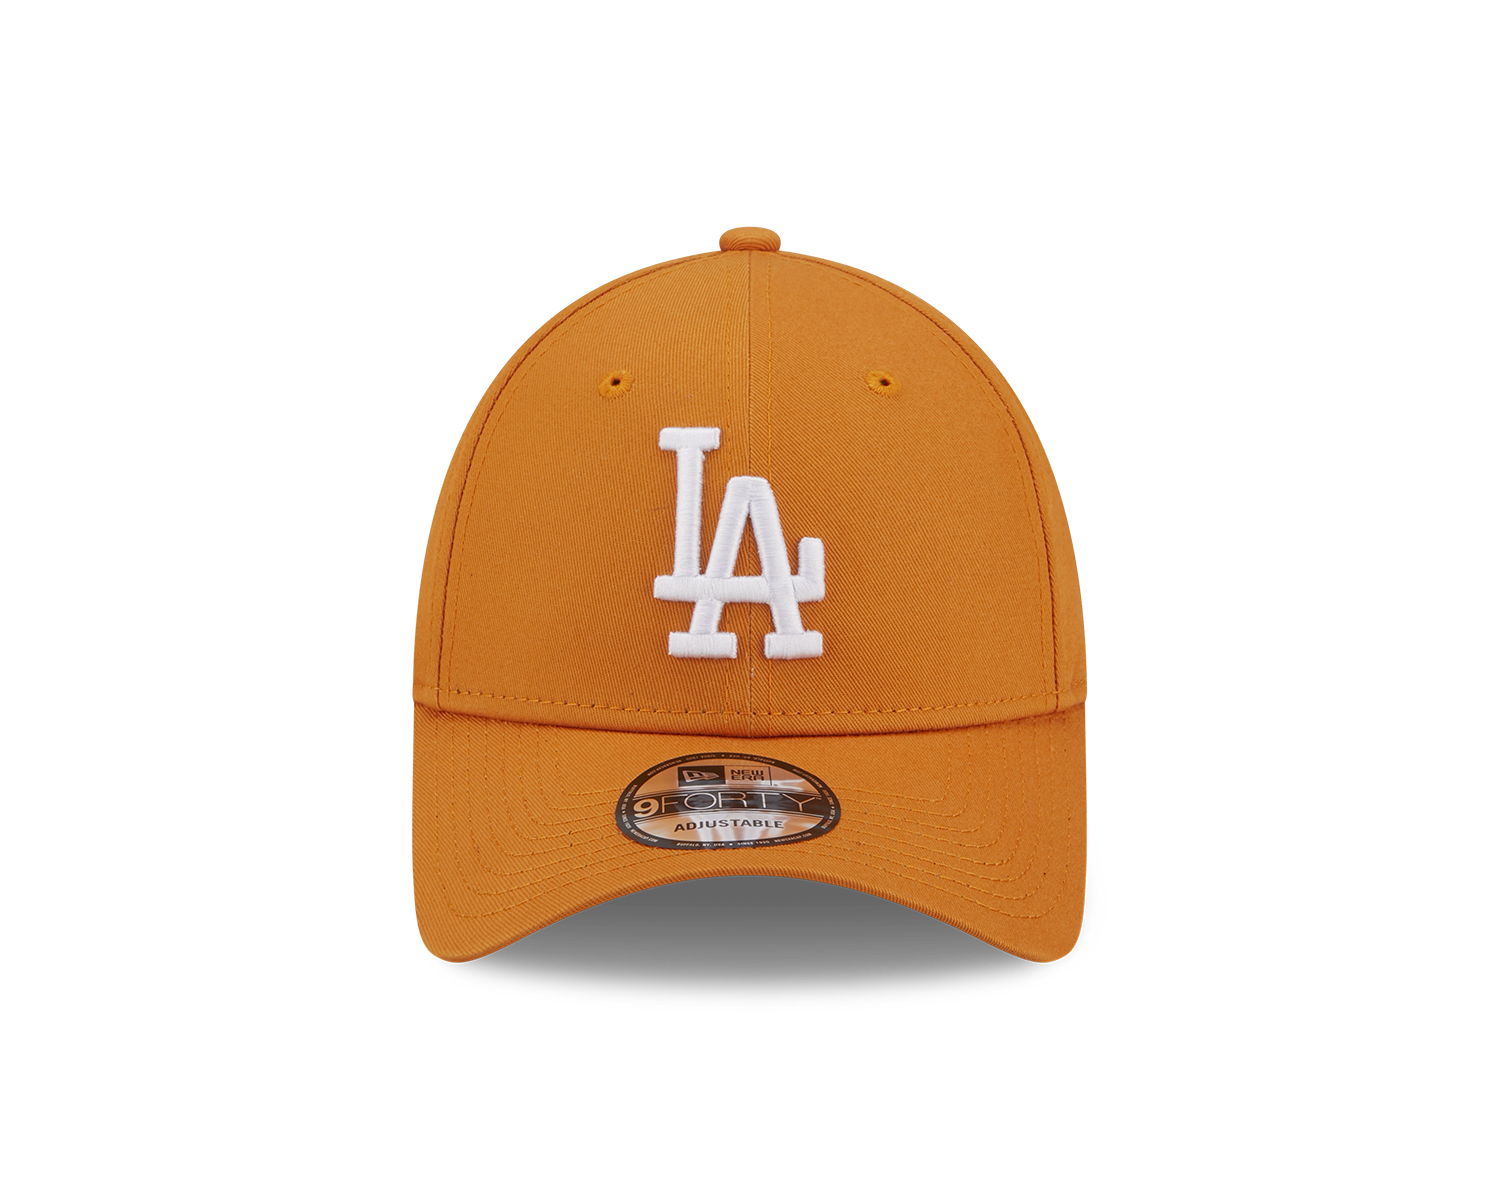 League Essential 9Forty - Los Angeles Dodgers Paprika/White